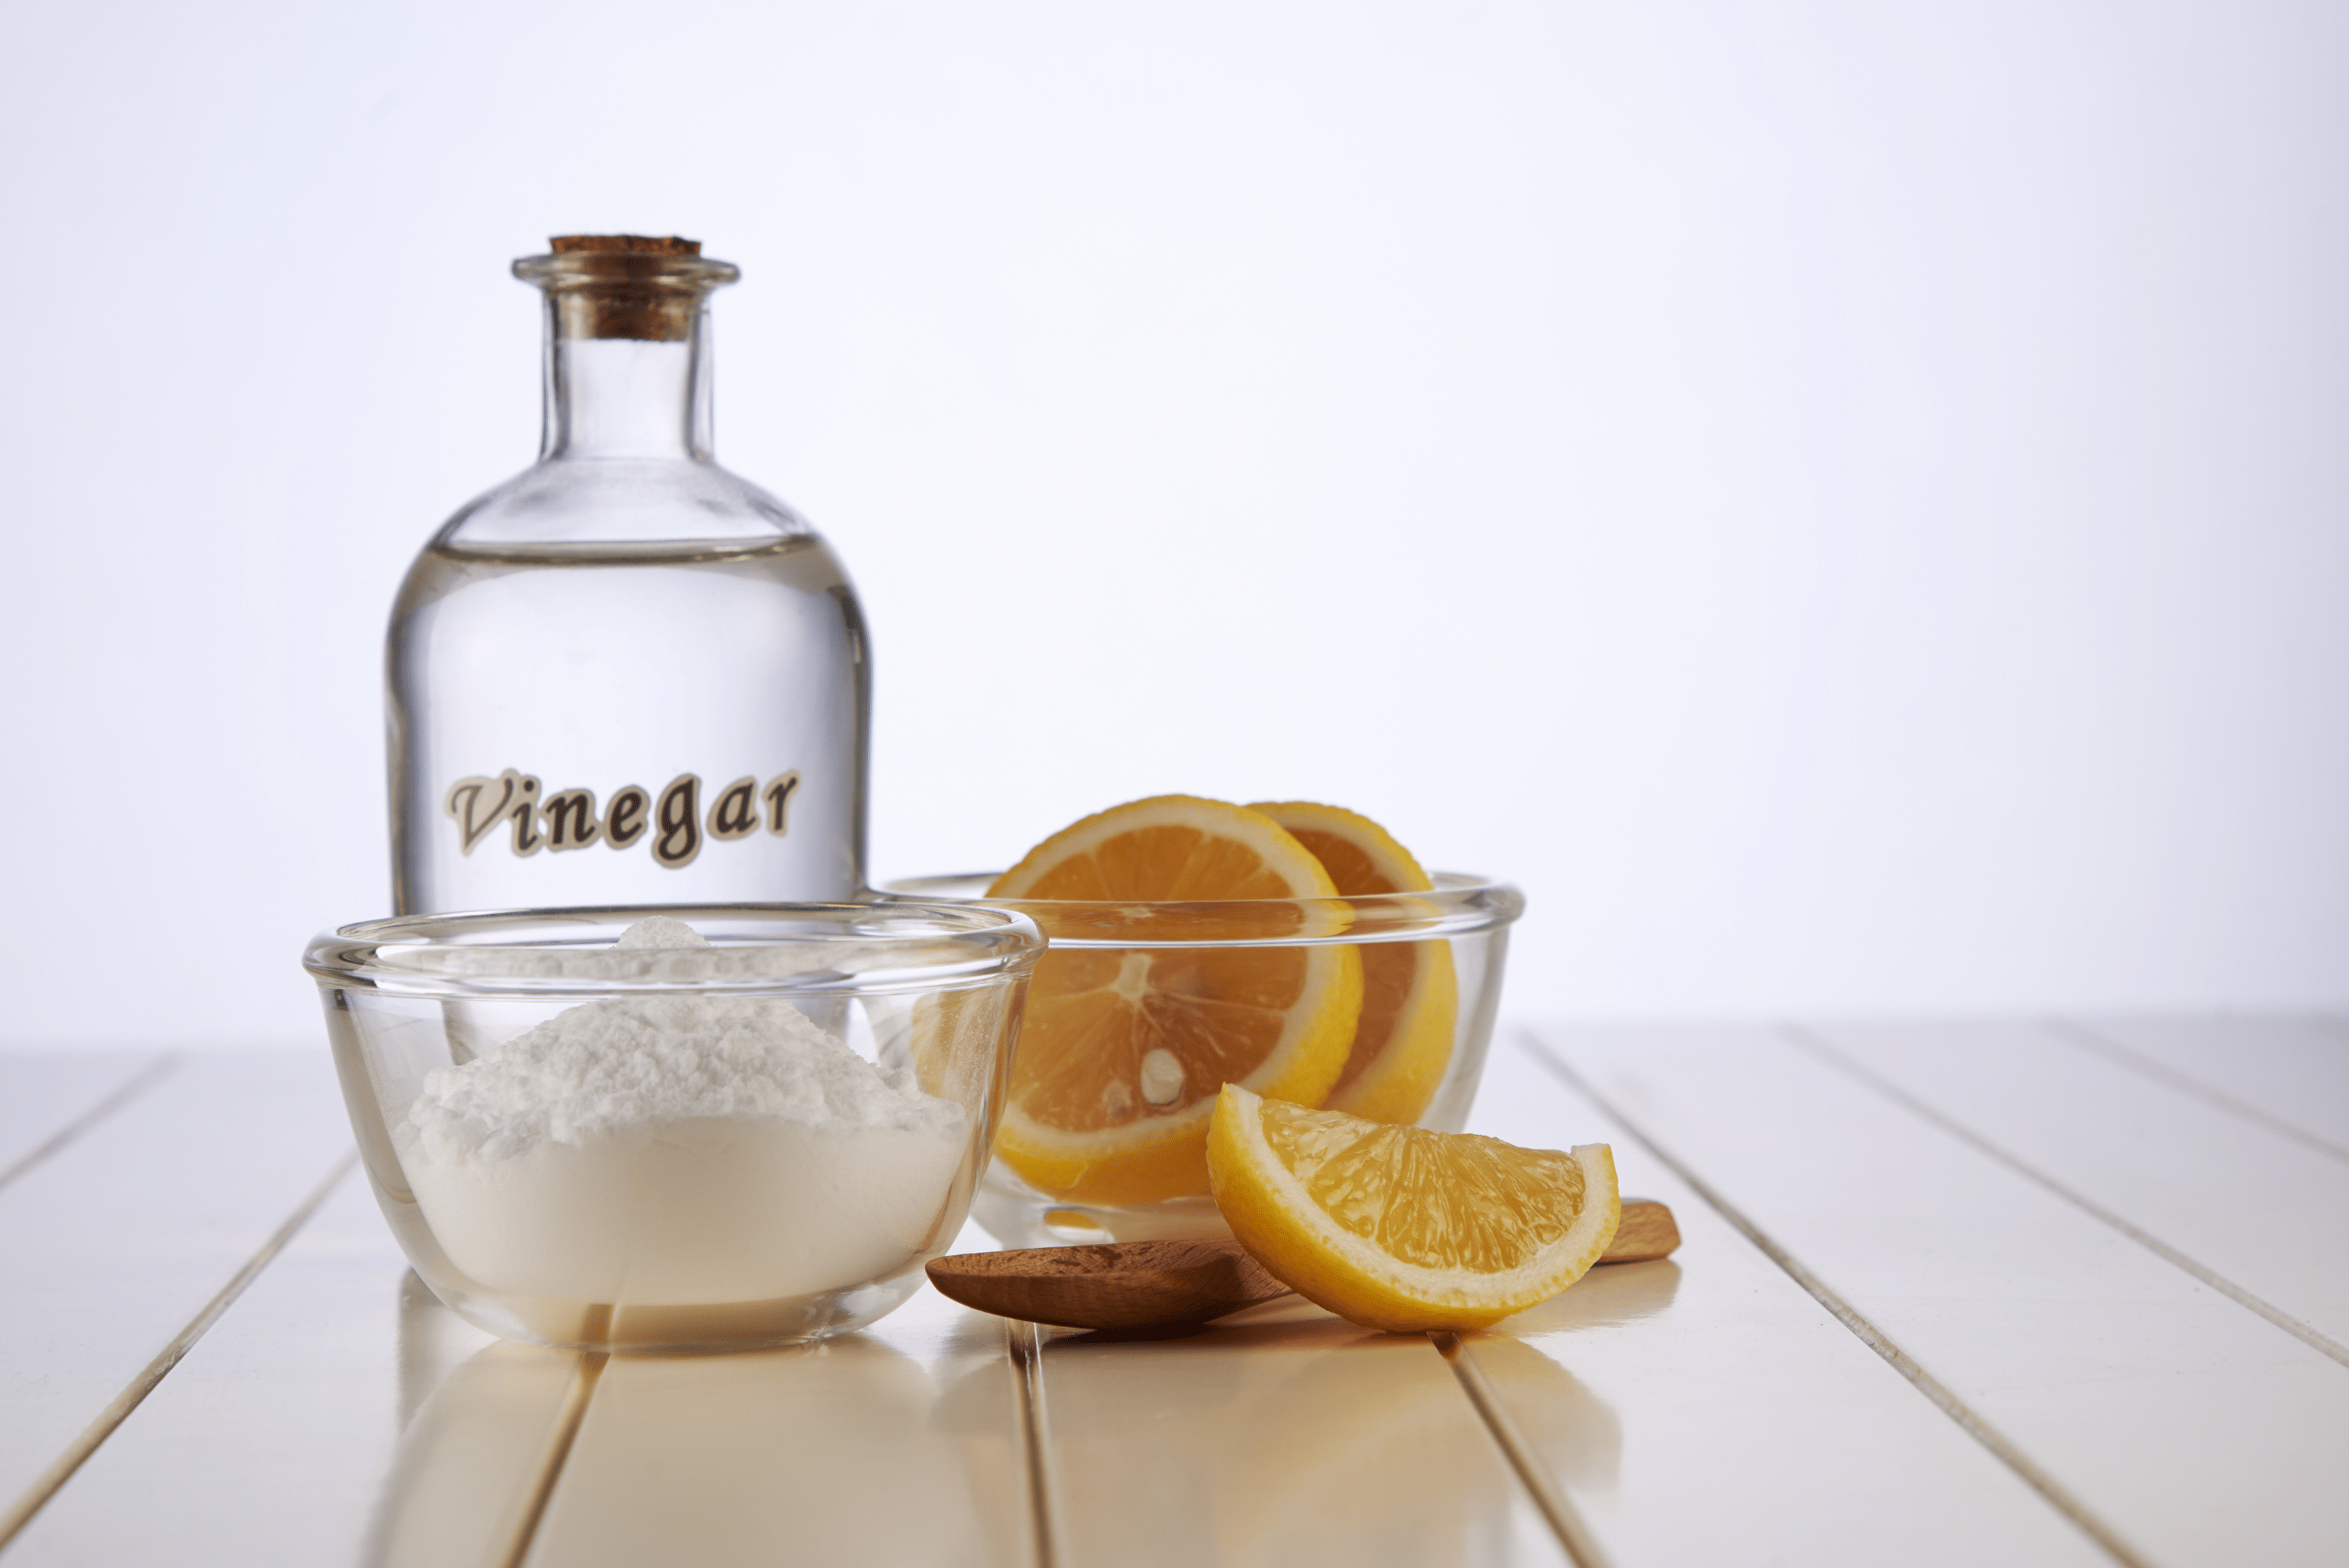 A bottle of vinegar and a bowl of lemon slices.